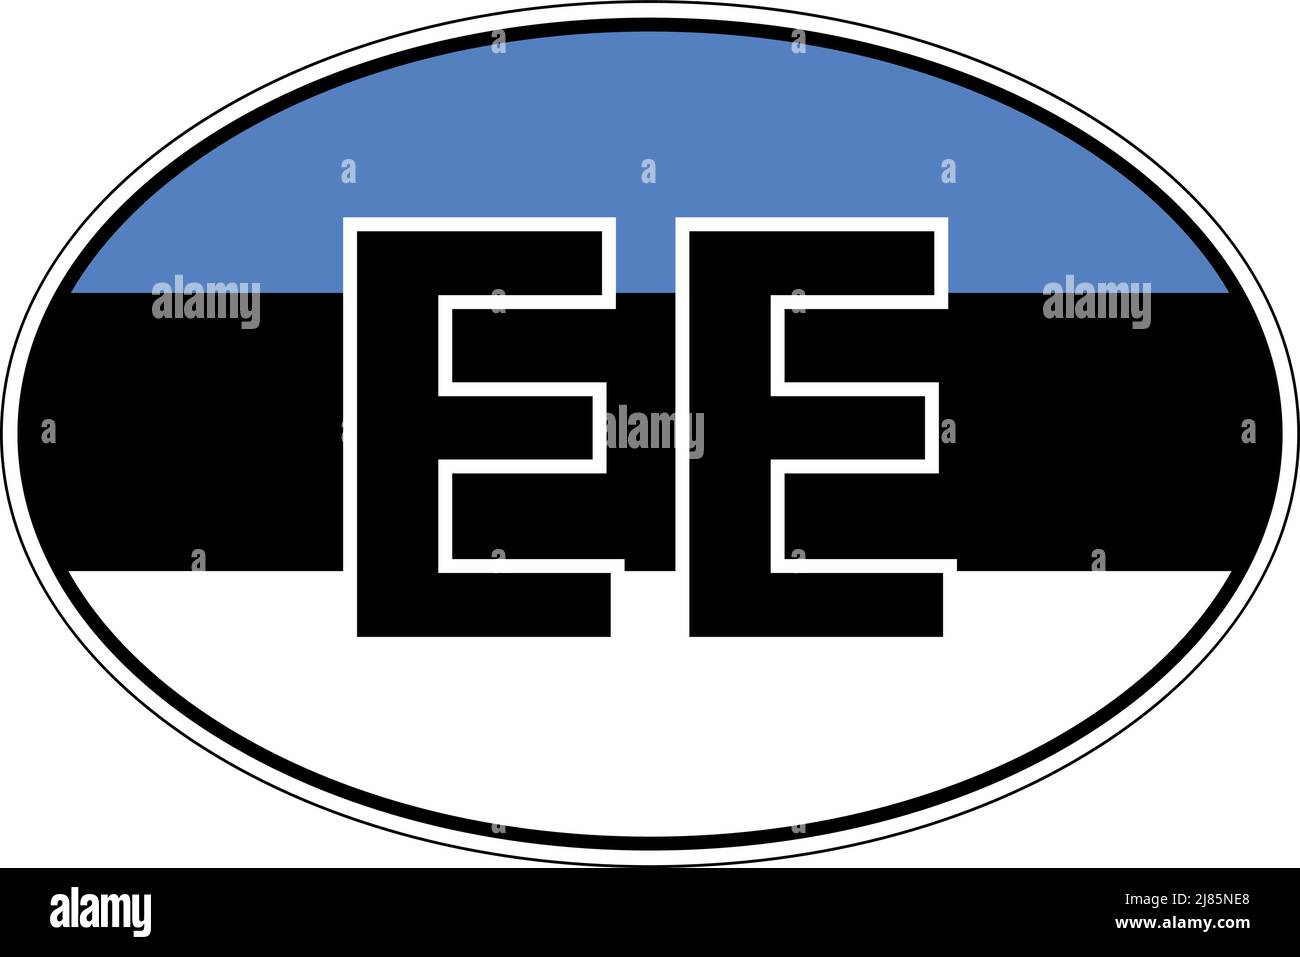 Estonia EE EST flag label sticker car, international license plate Stock Vector